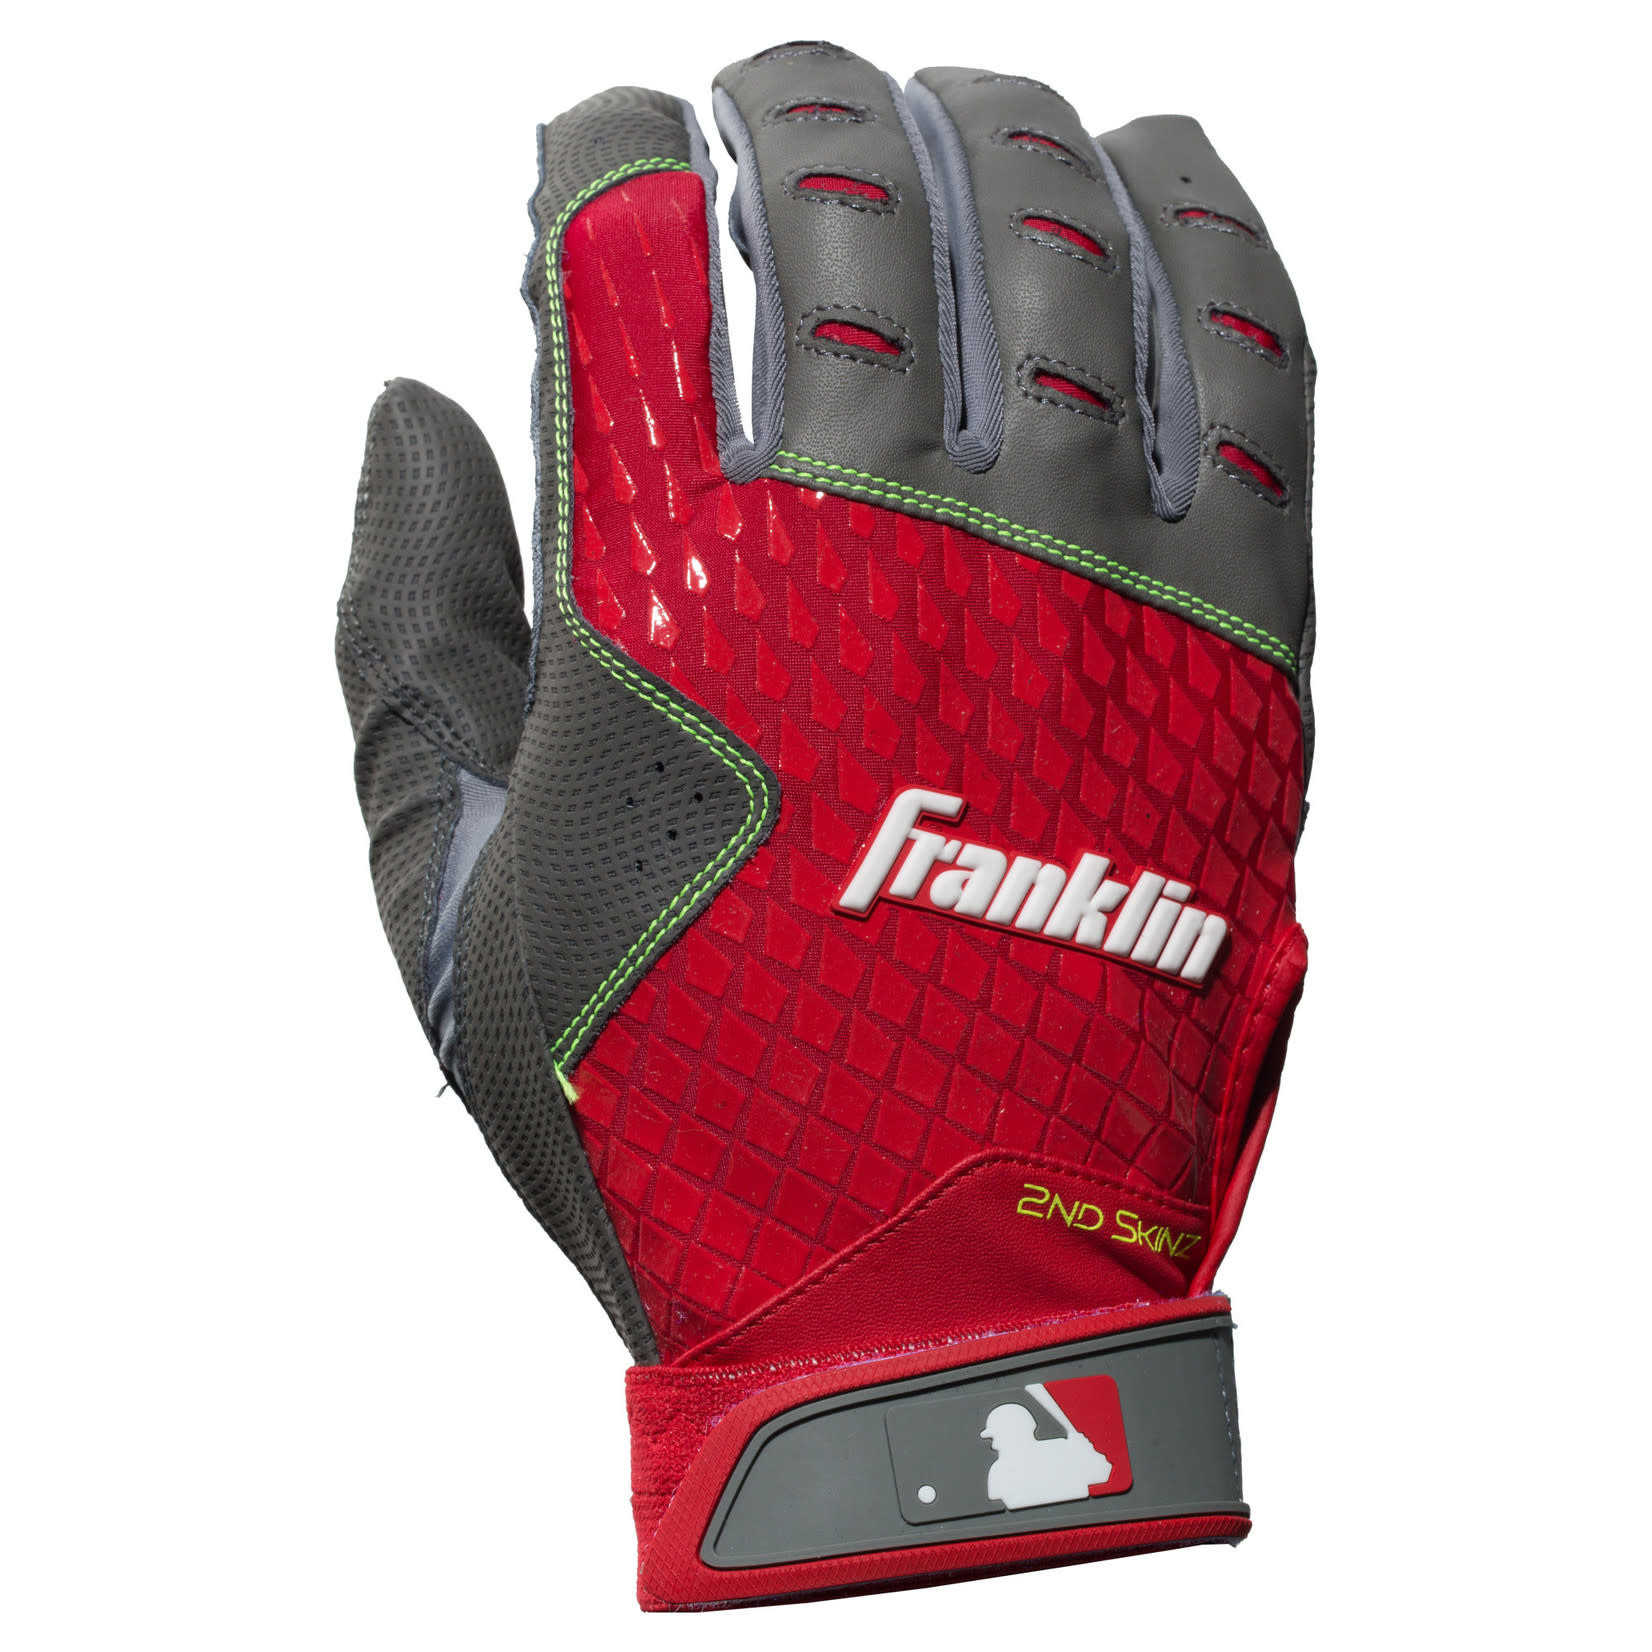 Franklin 2nd Skinz Batting Glove - Youth L